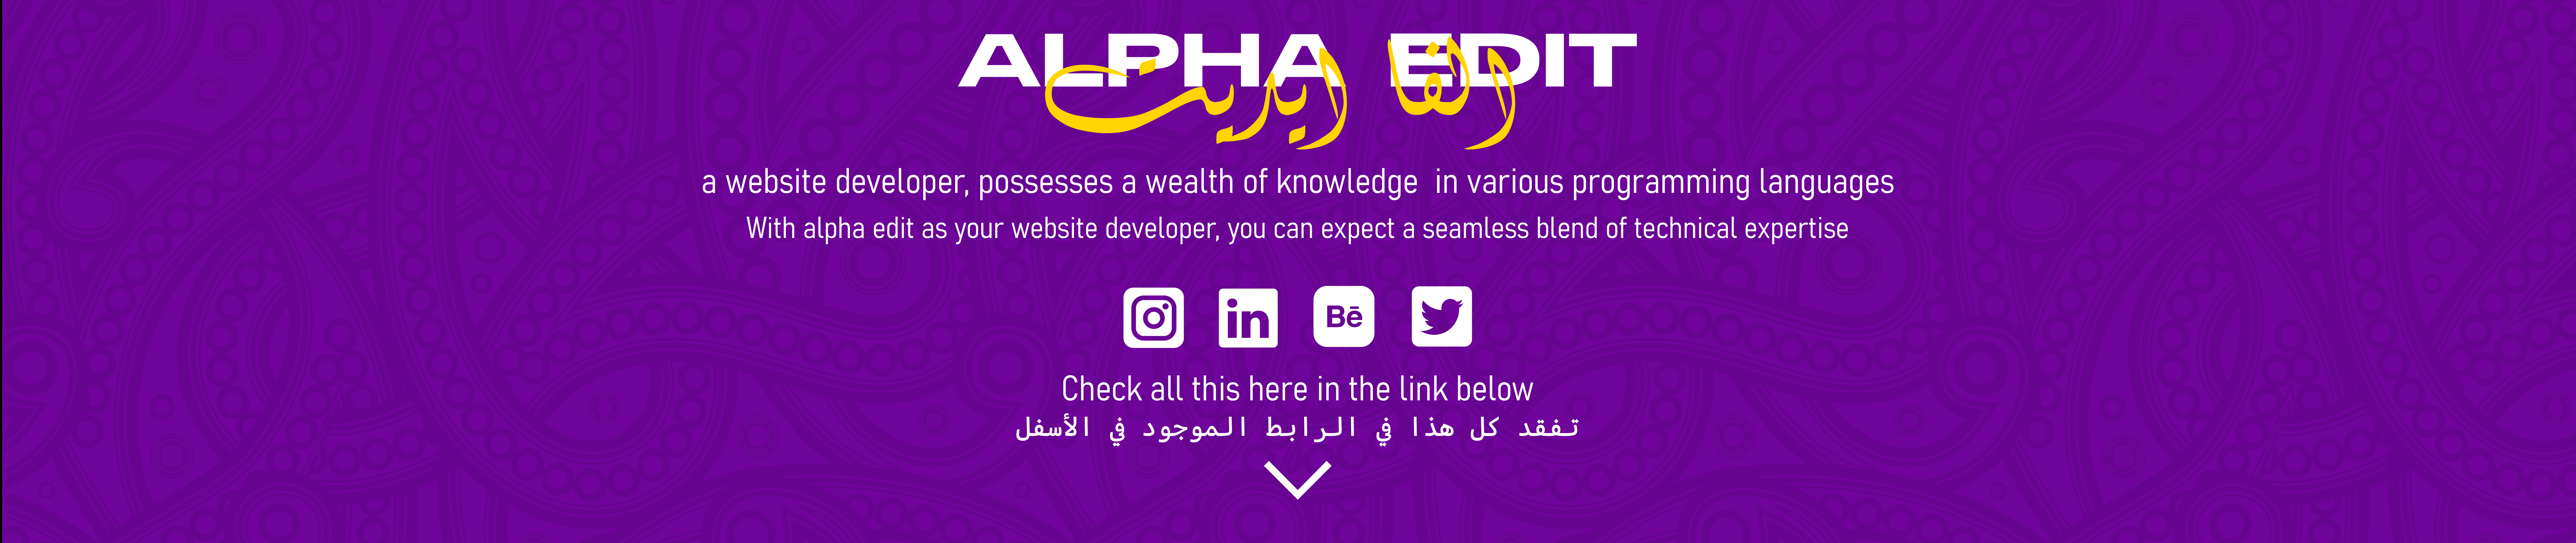 ALPHA EDIT's profile banner